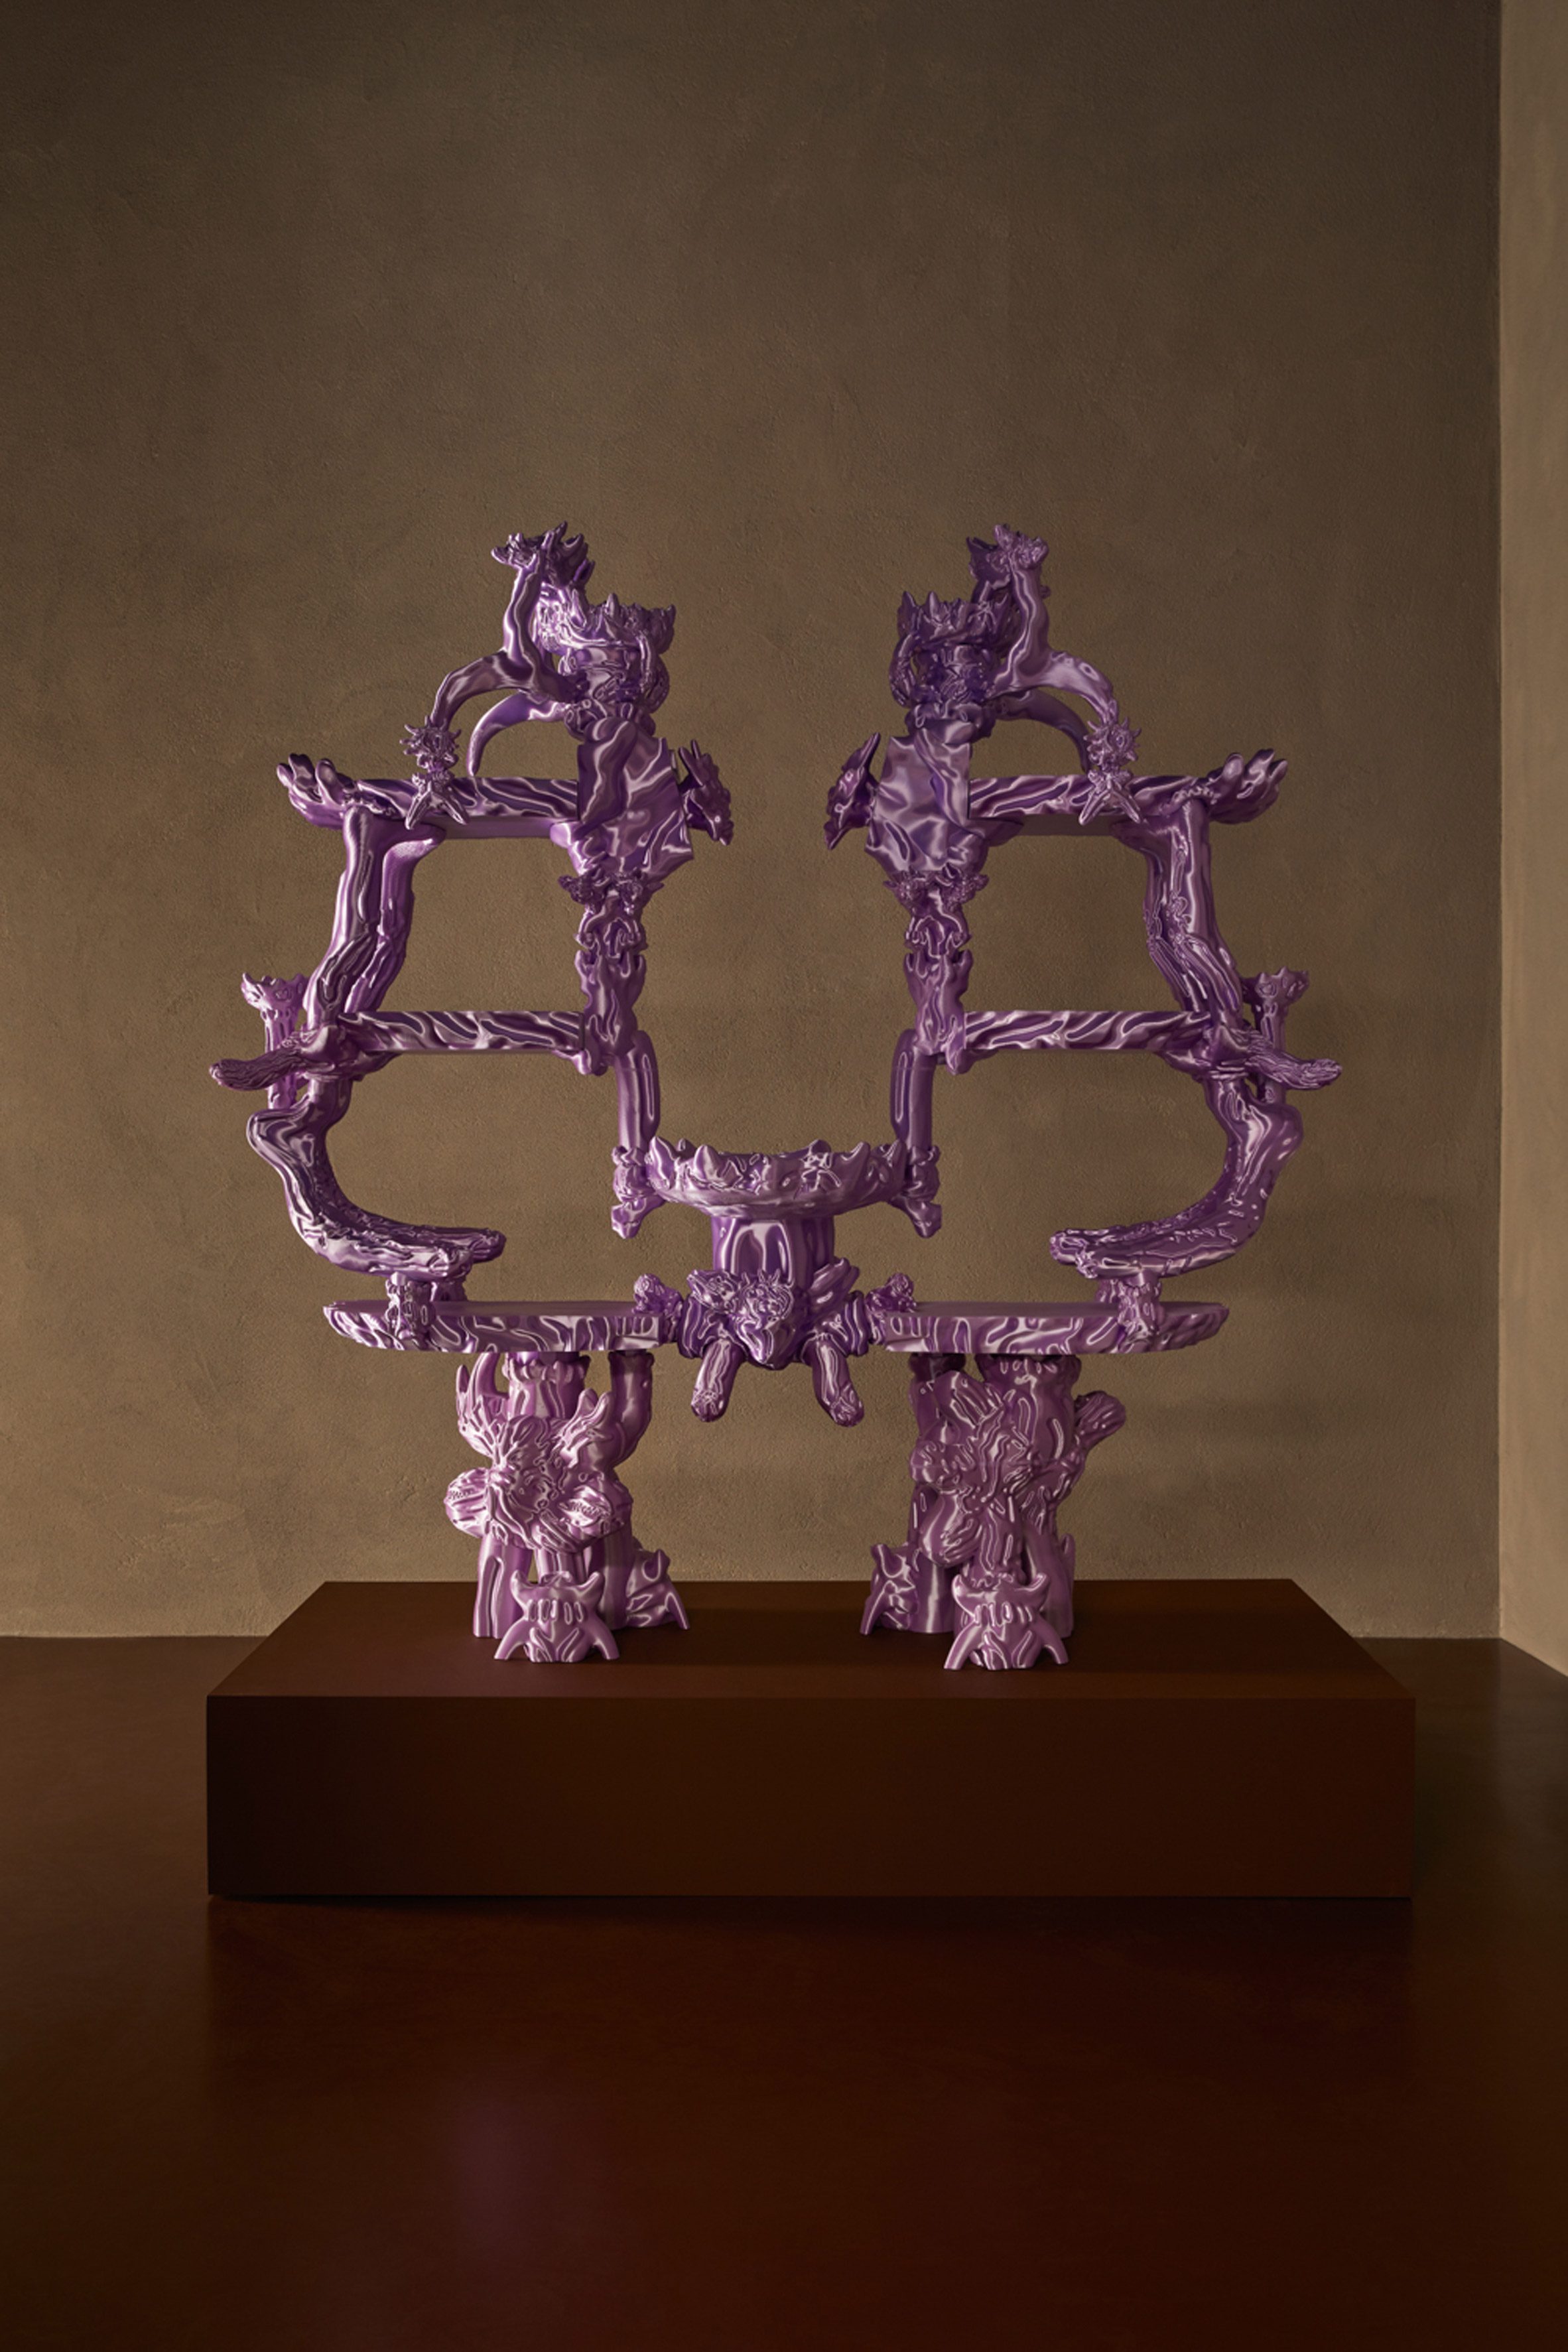 3D-printed sculpture by Audrey Large